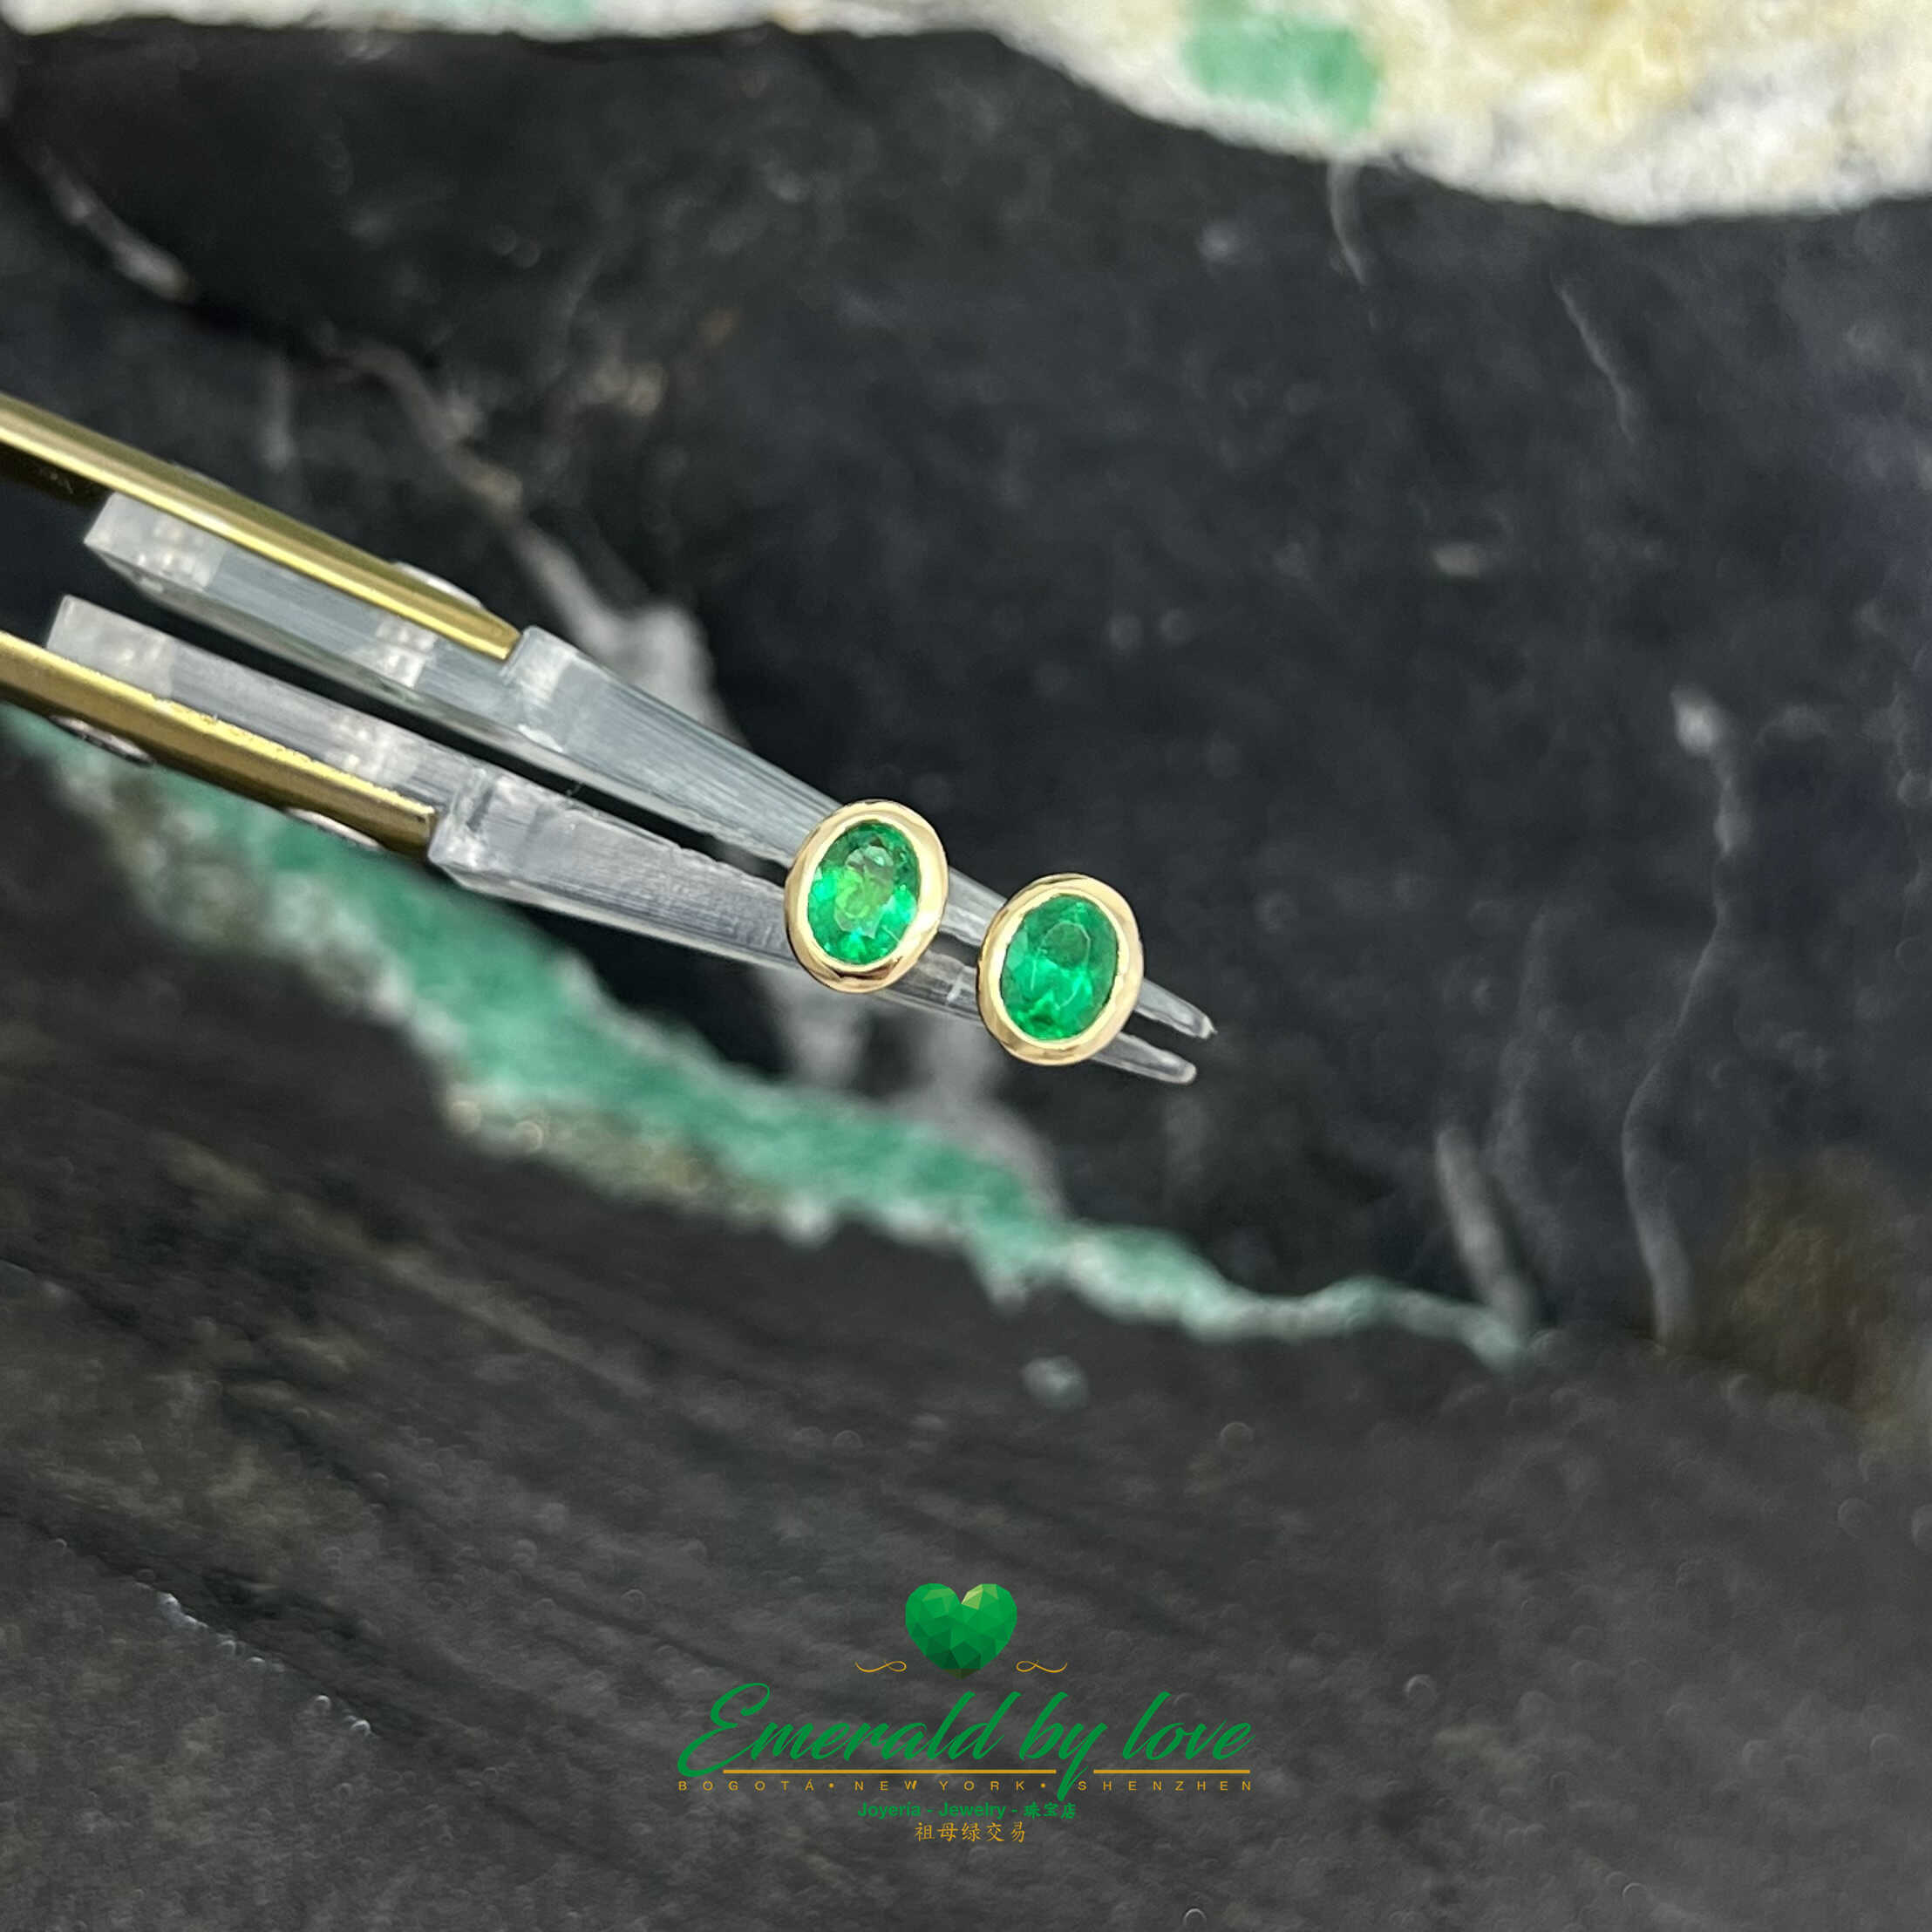 Sculpted Elegance: 18K Yellow Gold Bezel-Set Stud Earrings with 0.35 TCW Colombian Emeralds